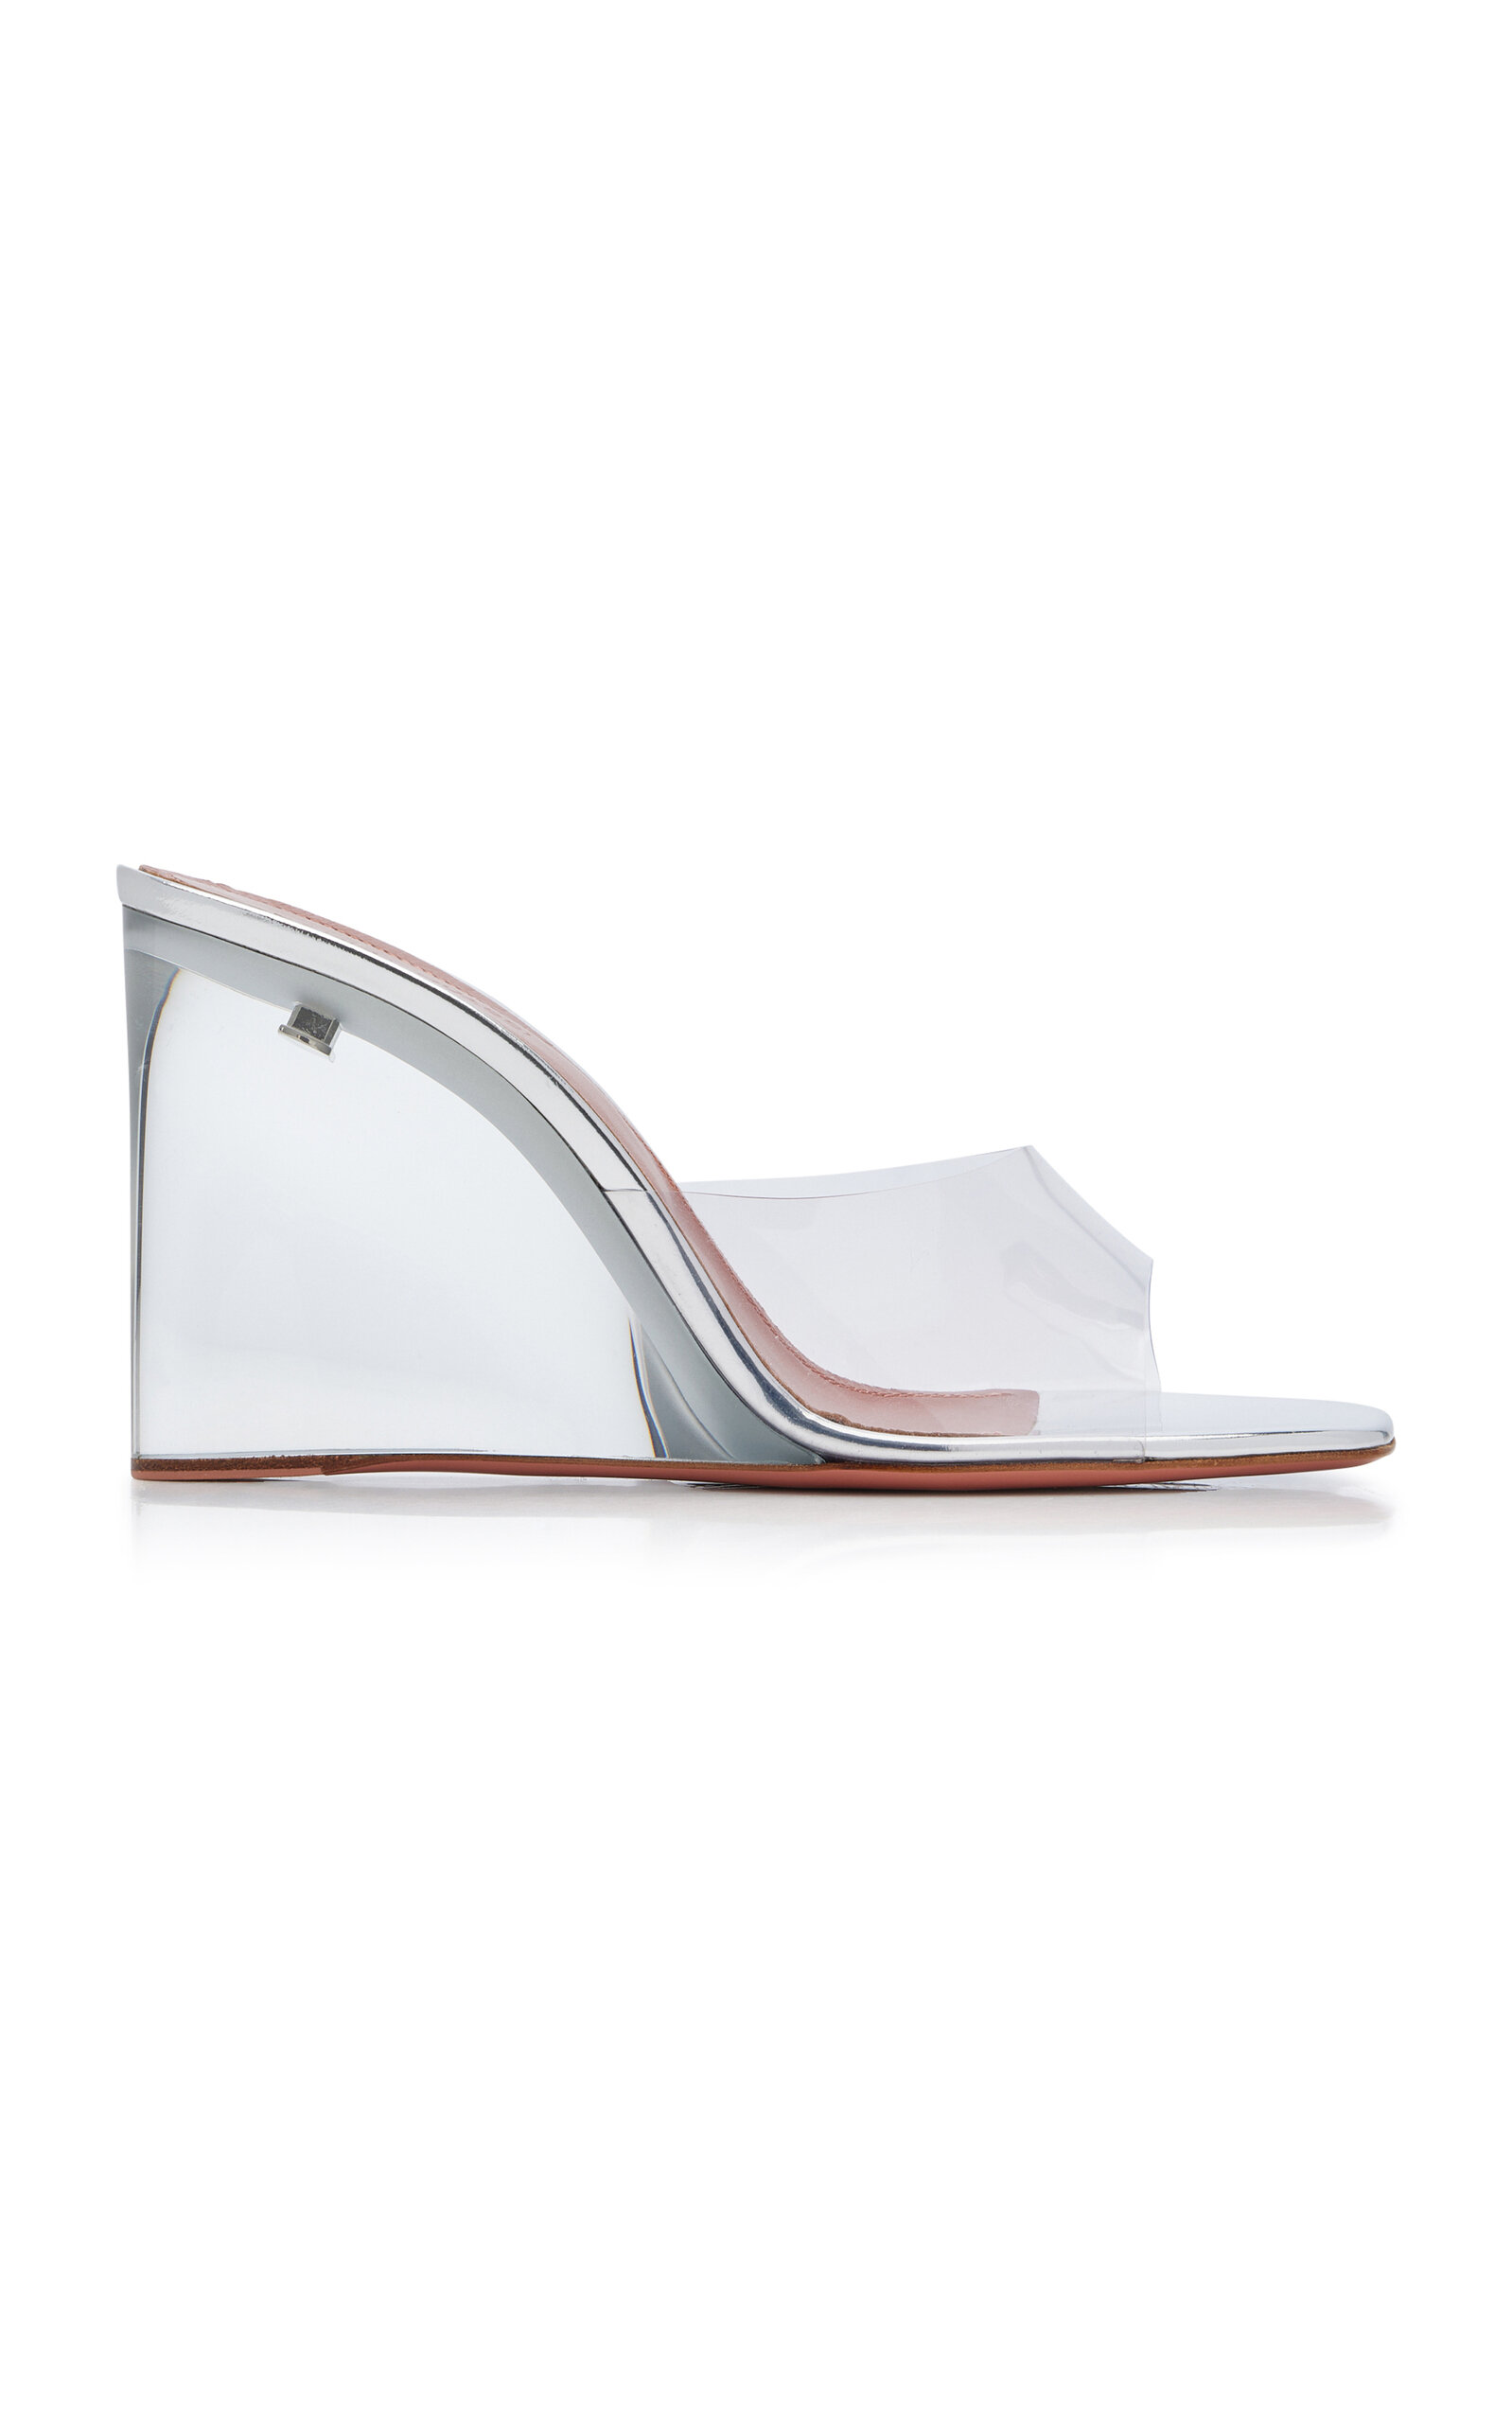 Amina Muaddi - Lupita PVC Wedge Sandals - Clear - IT 38 - Moda Operandi